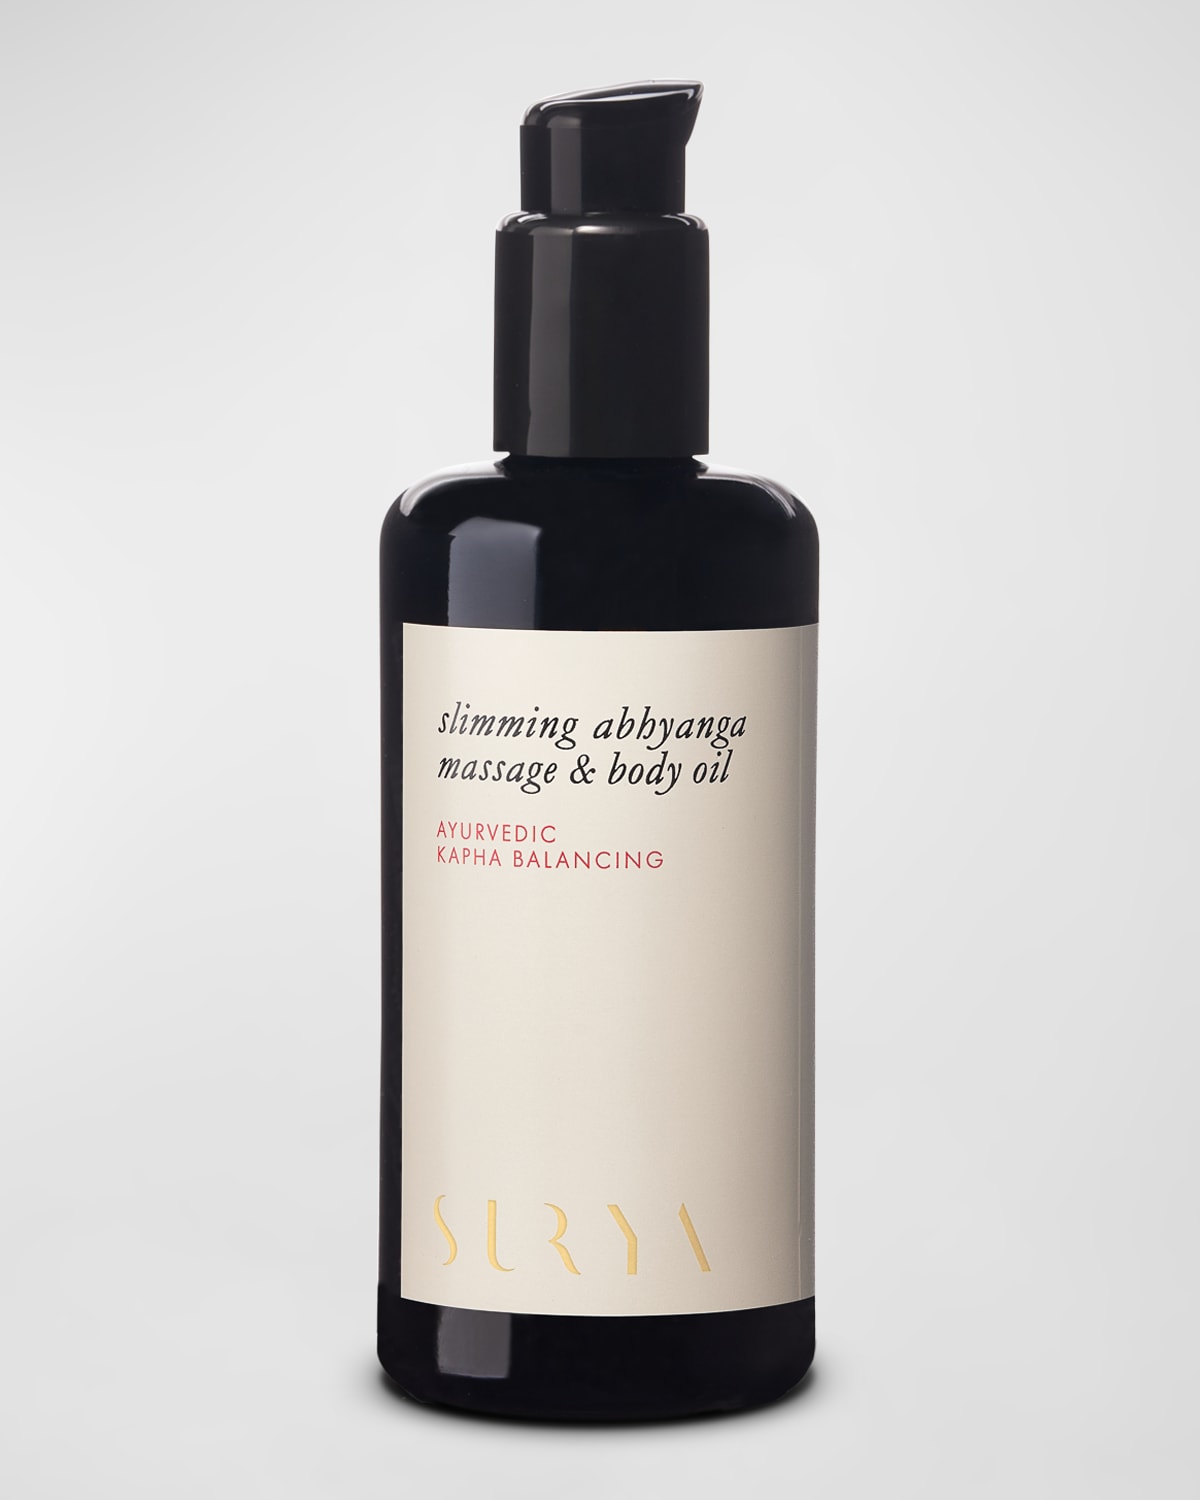 Slimming Abhyanga Massage Body Oil, 6.7 oz.